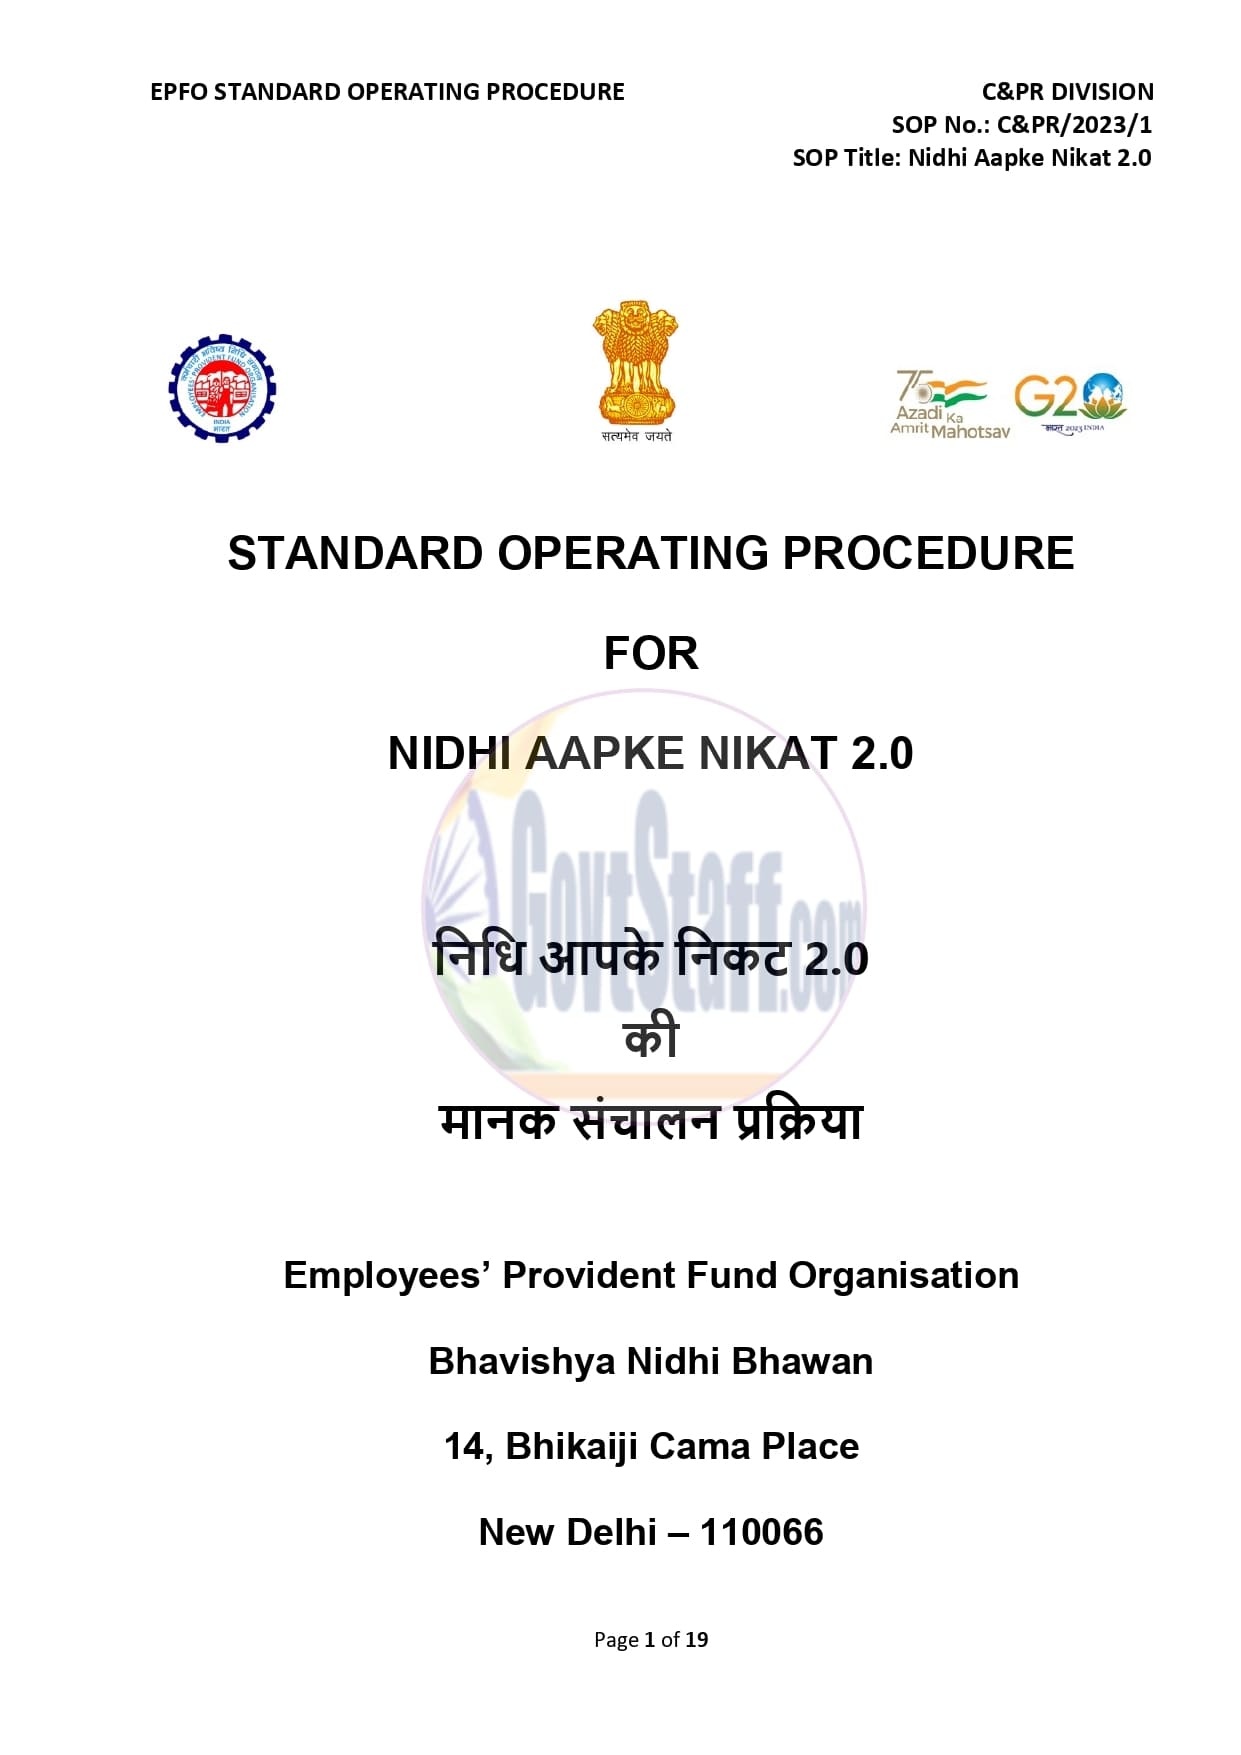 Nidhi Aapke Nikat 2.0 – Expansion and Strengthening of current program of Nidhi Aapke Nikat – Standard Operating Procedure